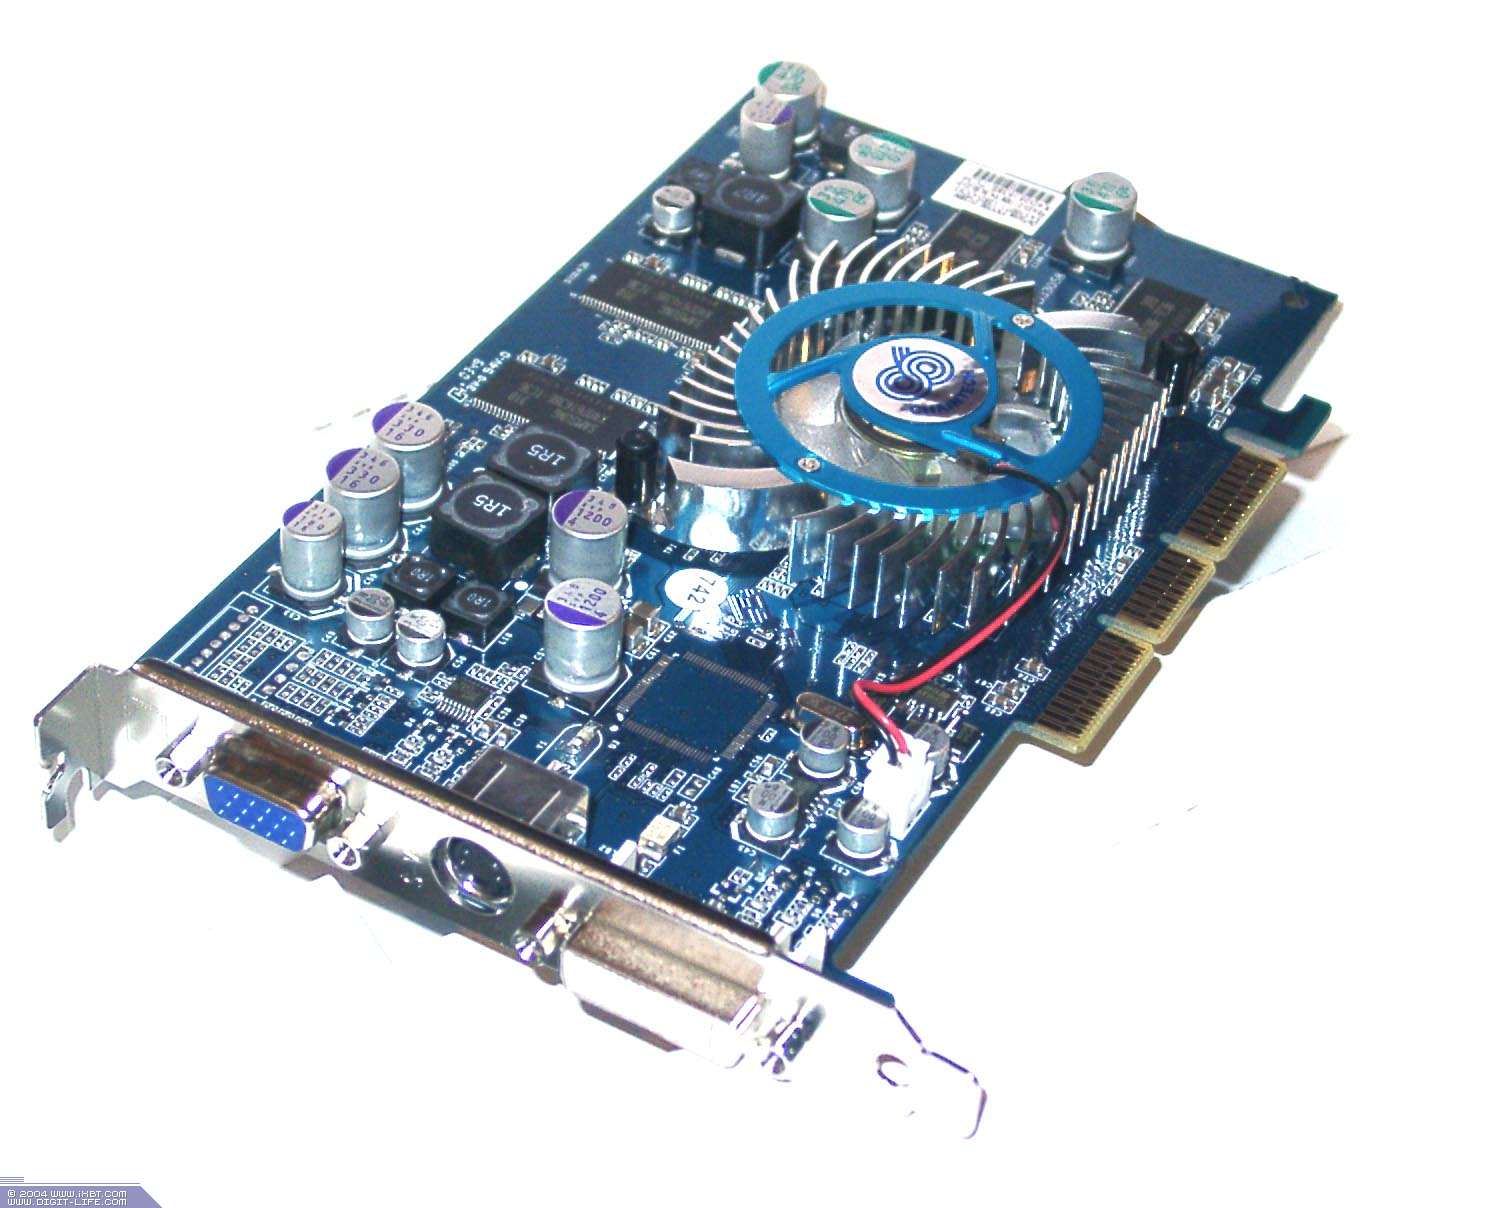 Gtx 5700. FX 5700 Ultra. GEFORCE fx5700 PCI. Видеокарта: GEFORCE 5700. Видеокарта FX 5700.